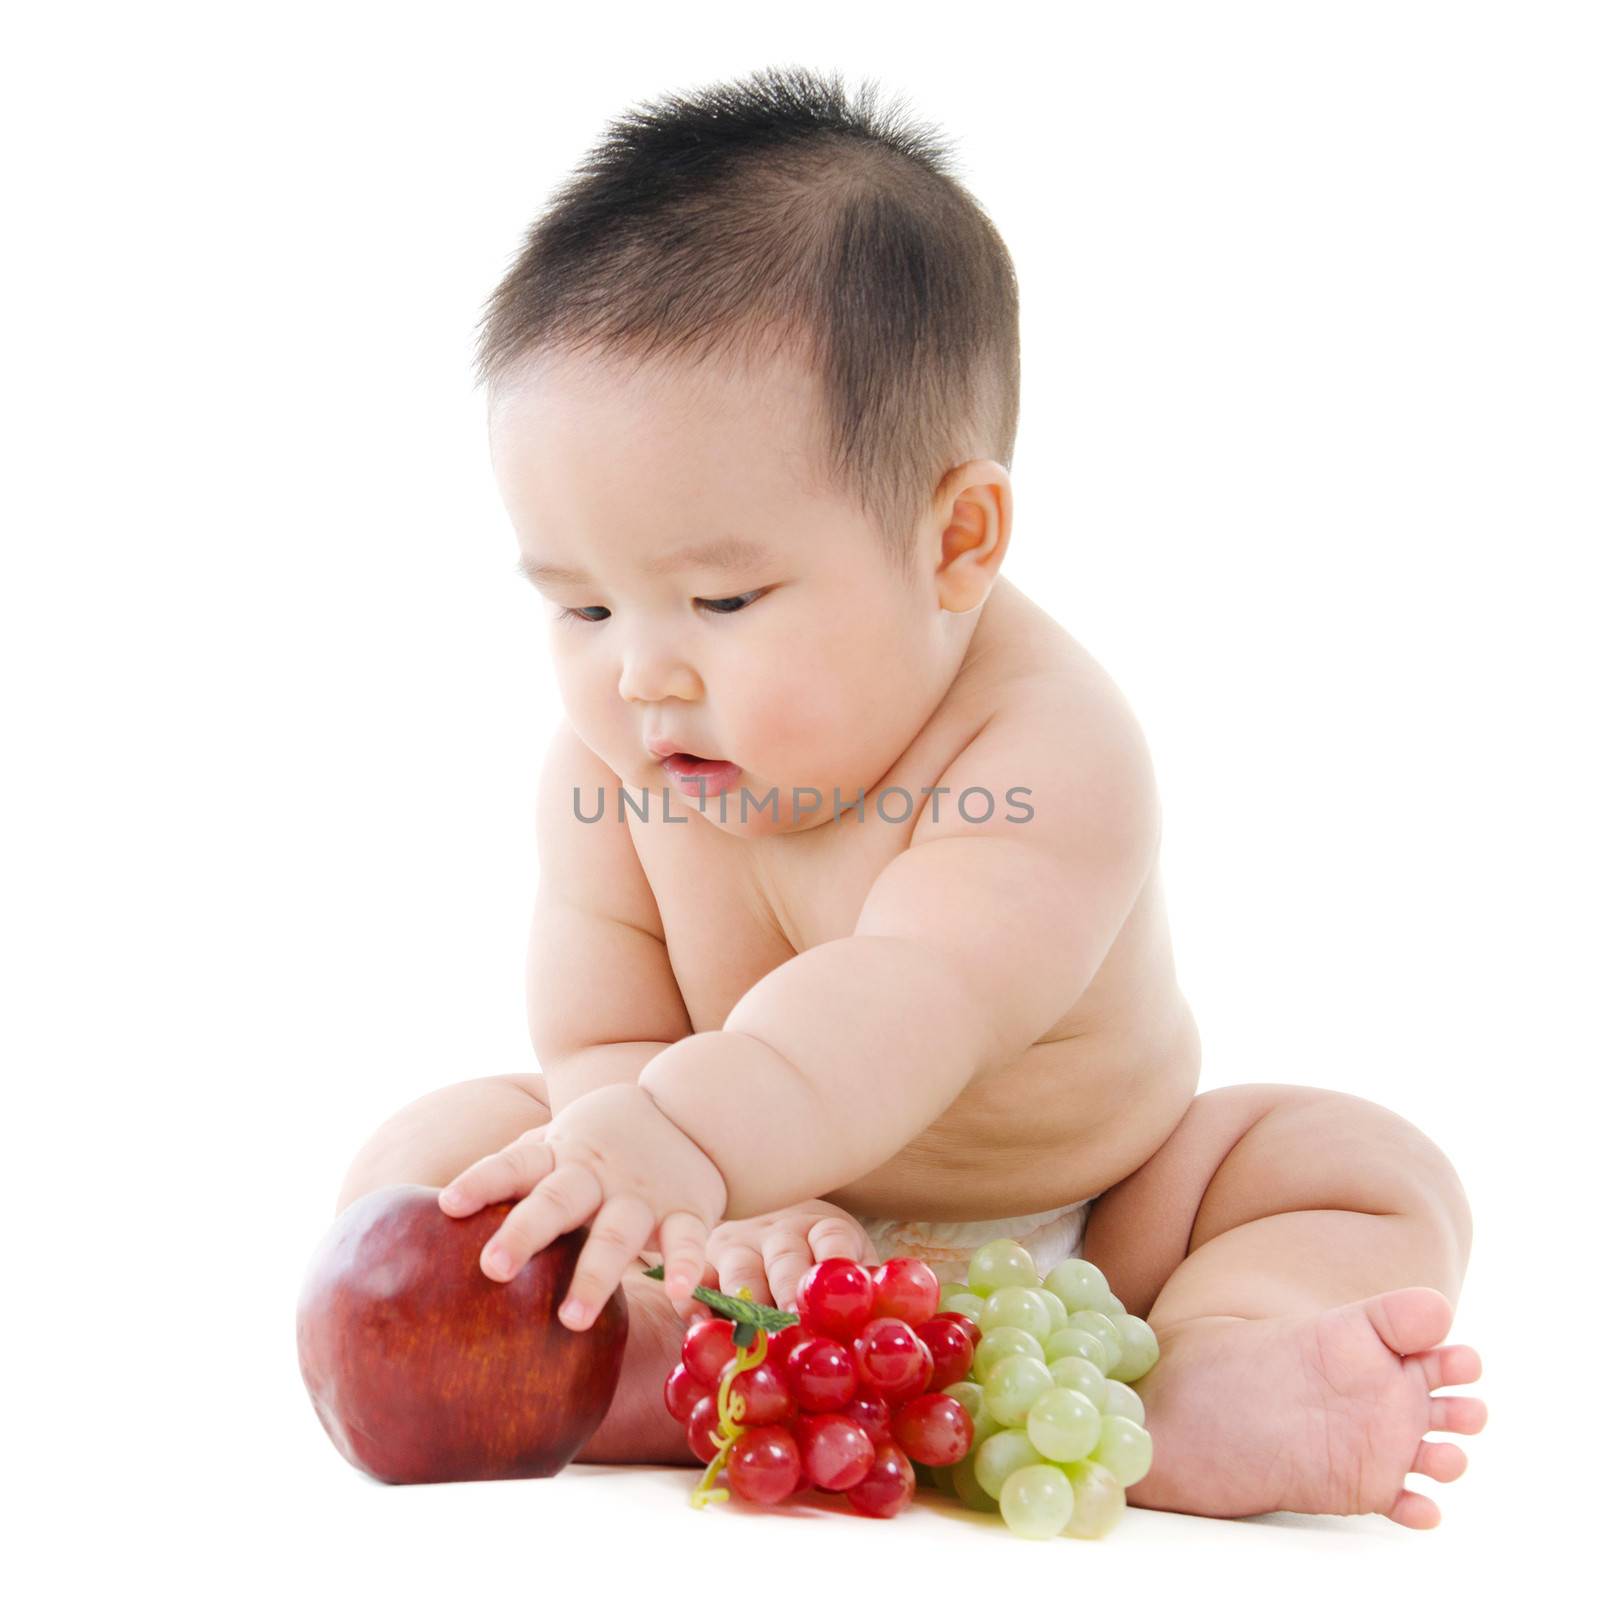 Baby boy with fruits by szefei